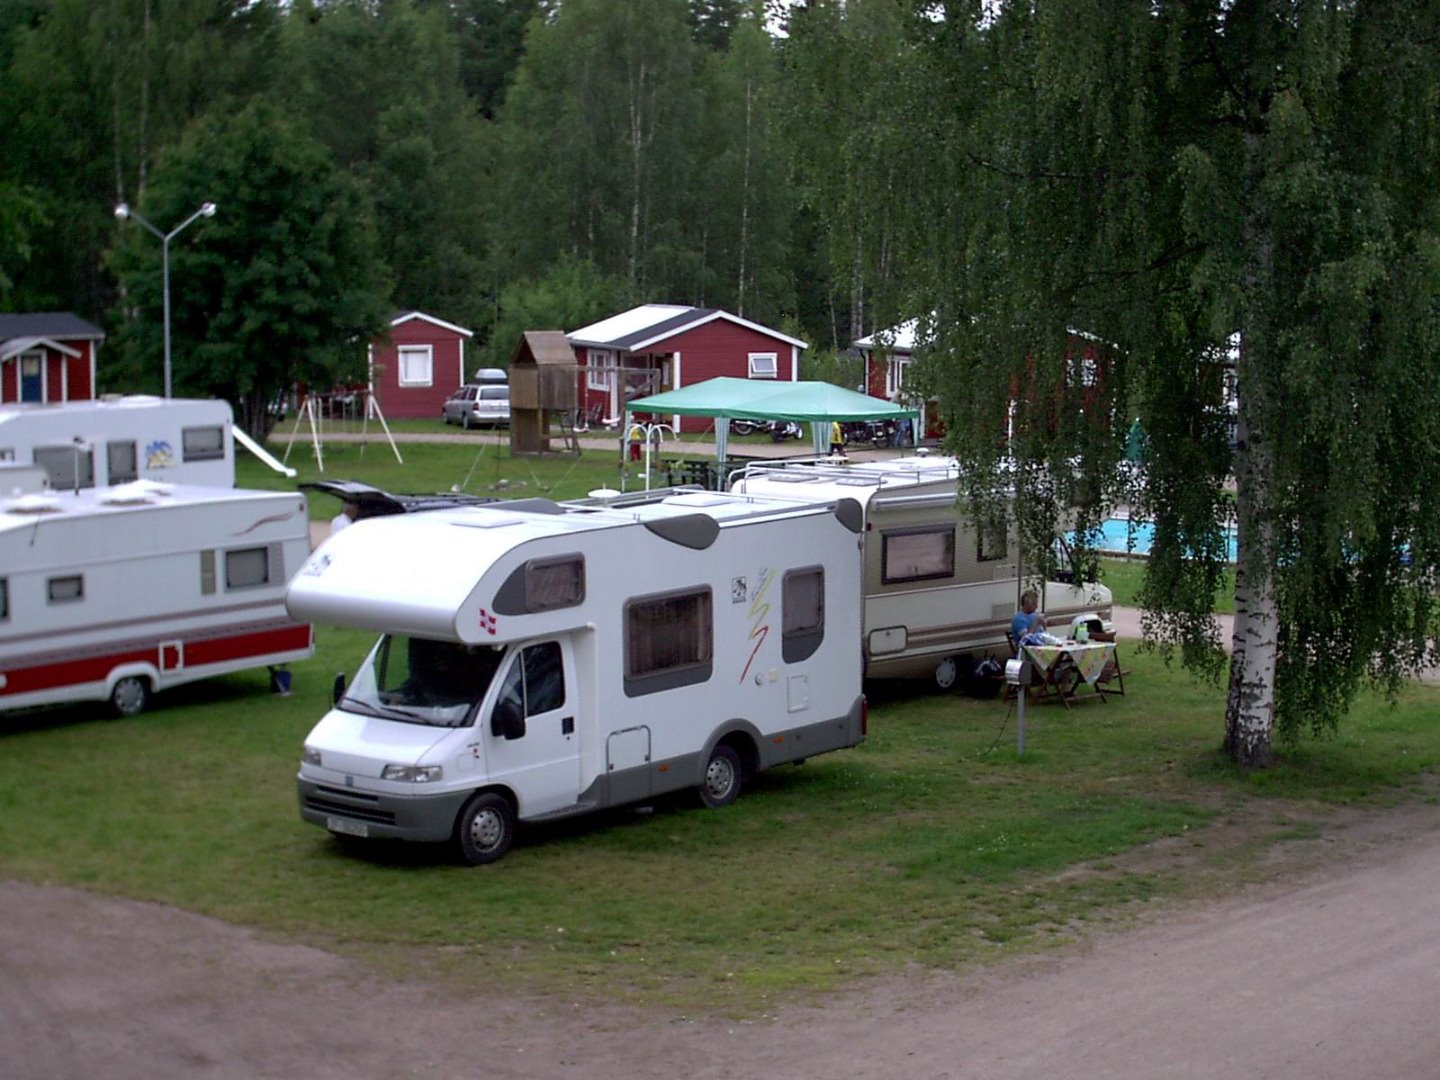 Kampeerplaatsen voor caravans/campers met elektriciteit